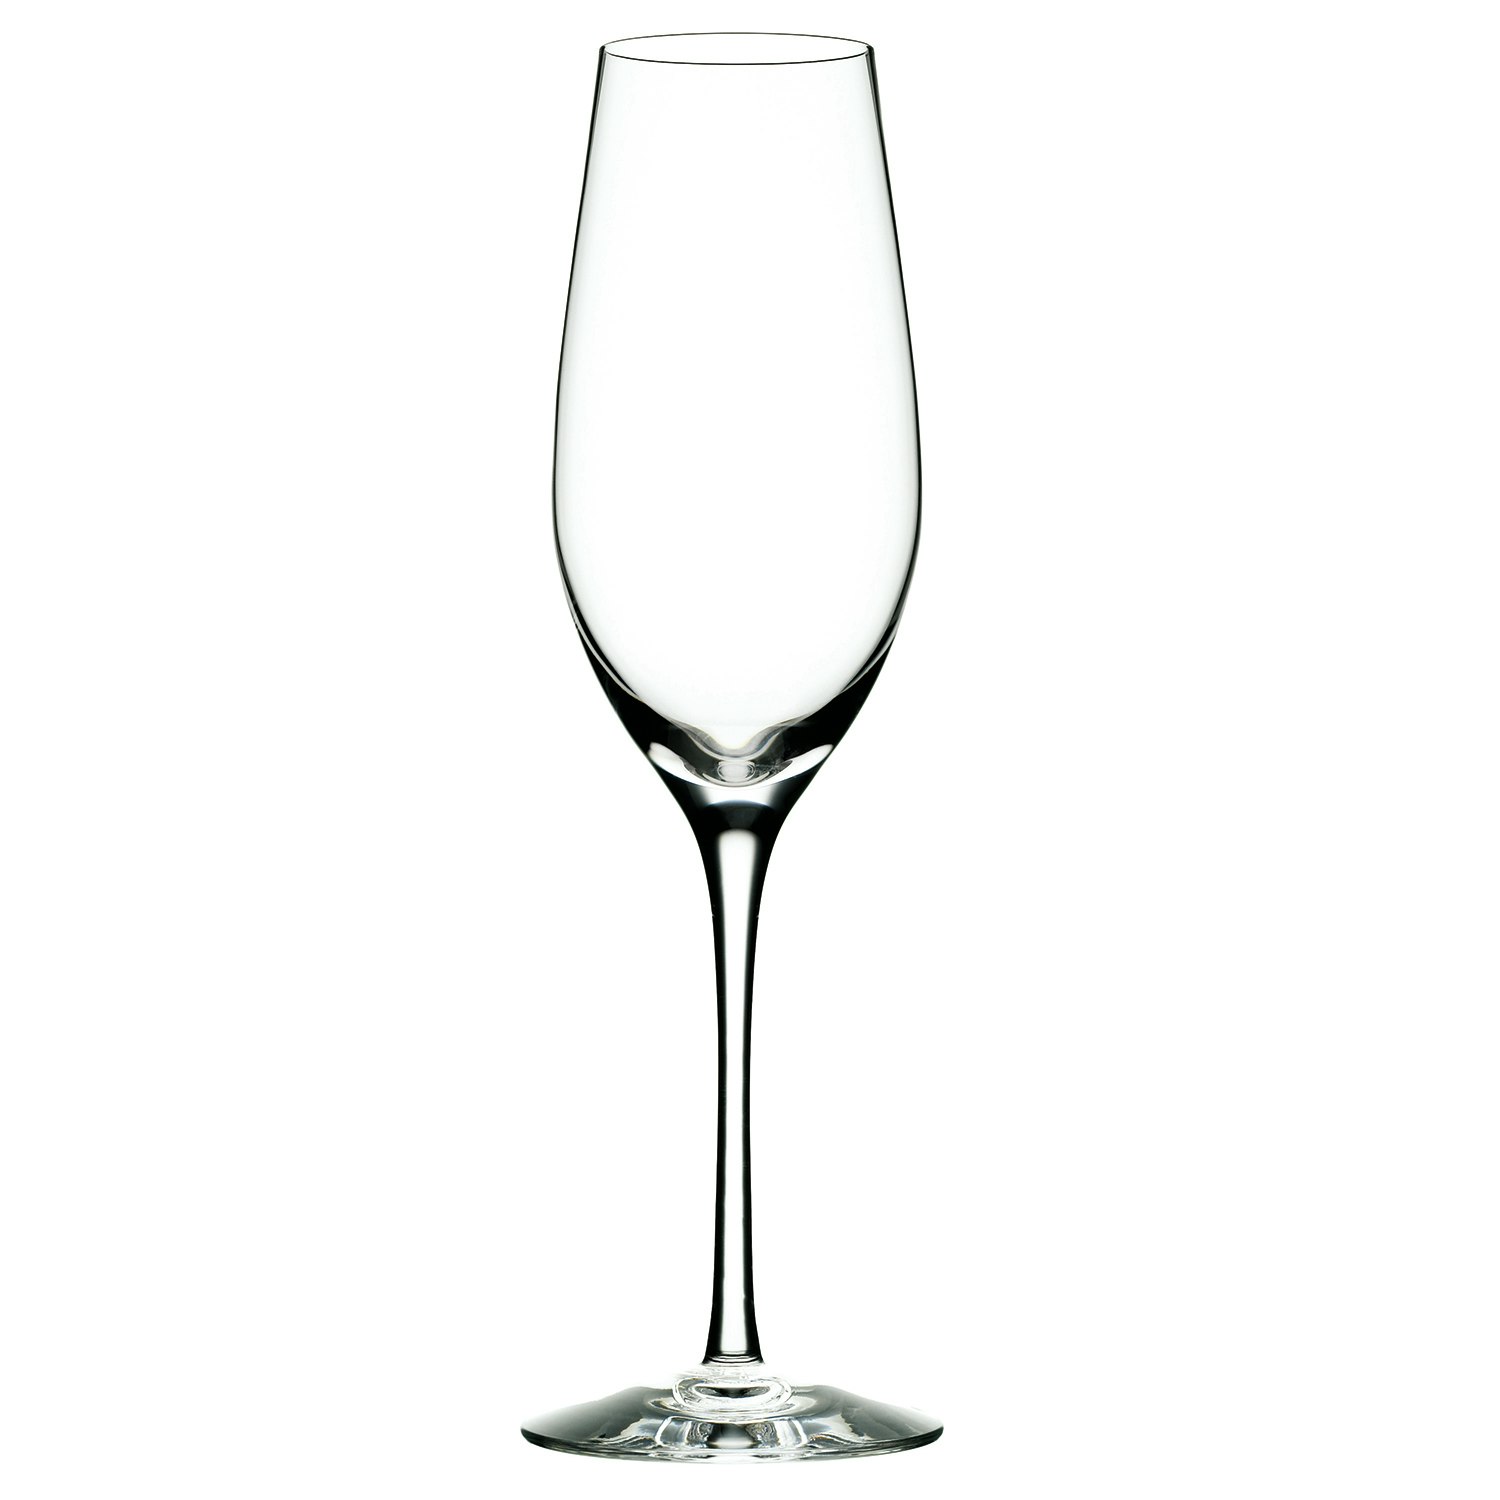 https://royaldesign.com/image/11/orrefors-merlot-champagne-glass-33-cl-0